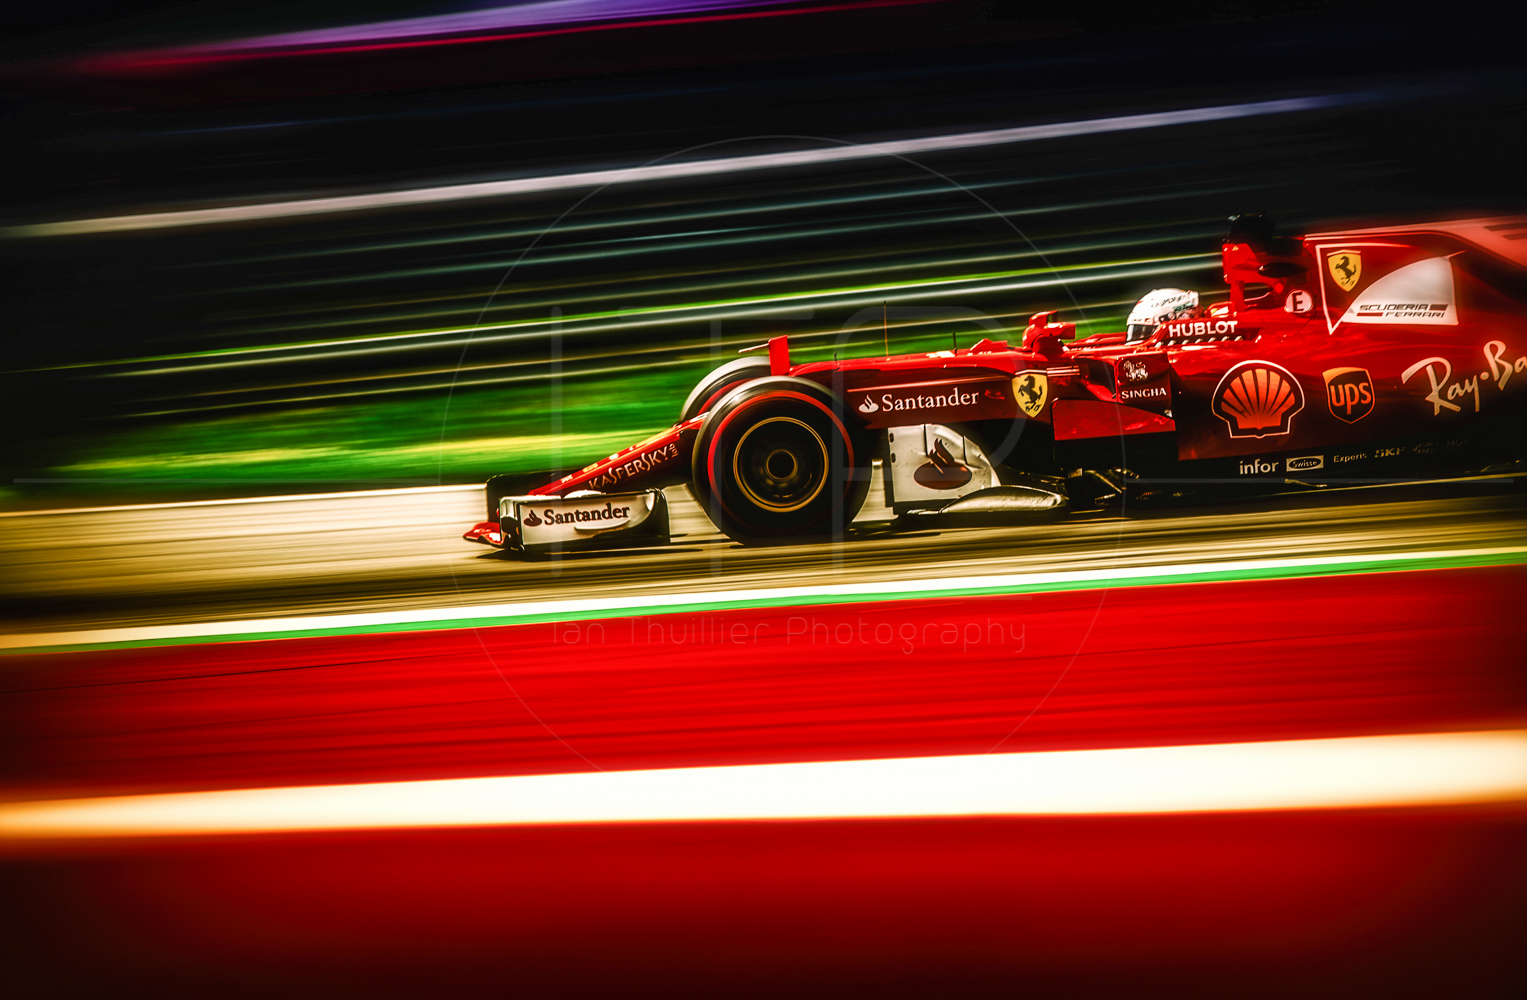 Formula 1 2017: Austrian Grand Prix by Ian Thuillier. 